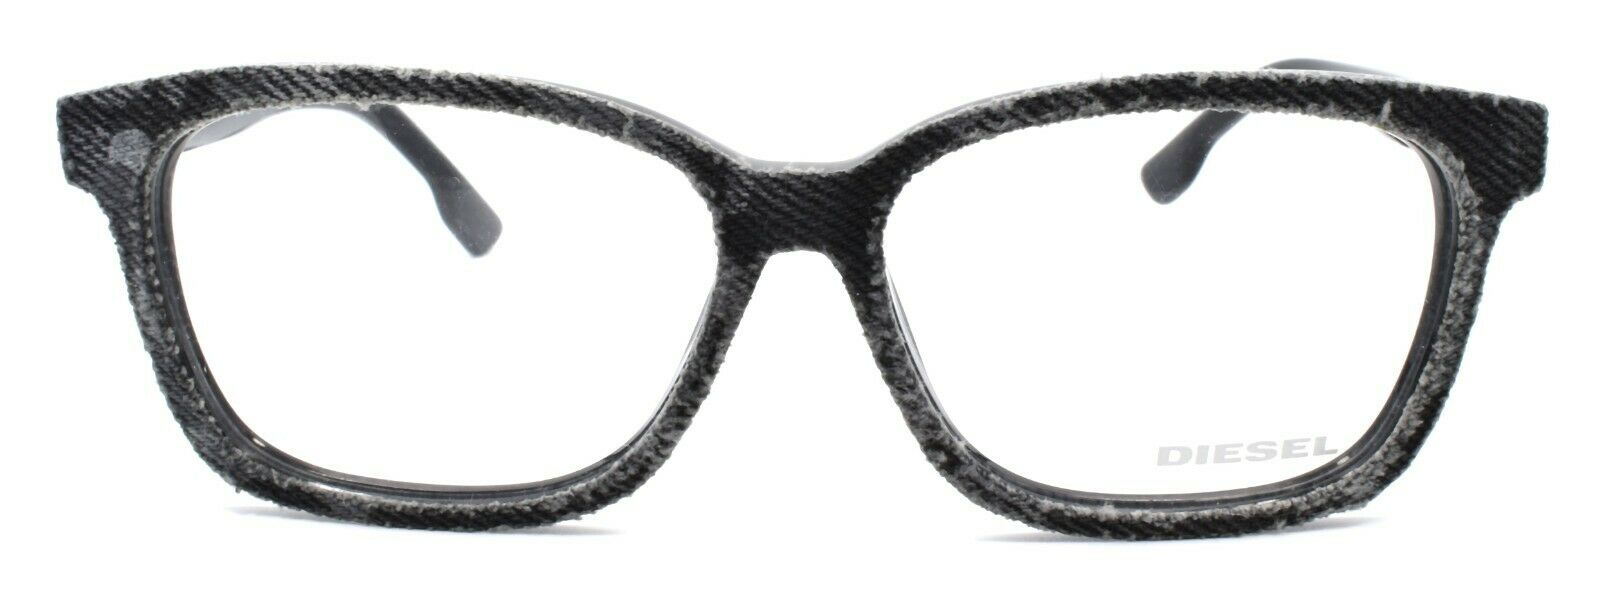 2-Diesel DL5137 020 Women's Eyeglasses Frames 55-14-140 Grey Denim / Black-664689668724-IKSpecs